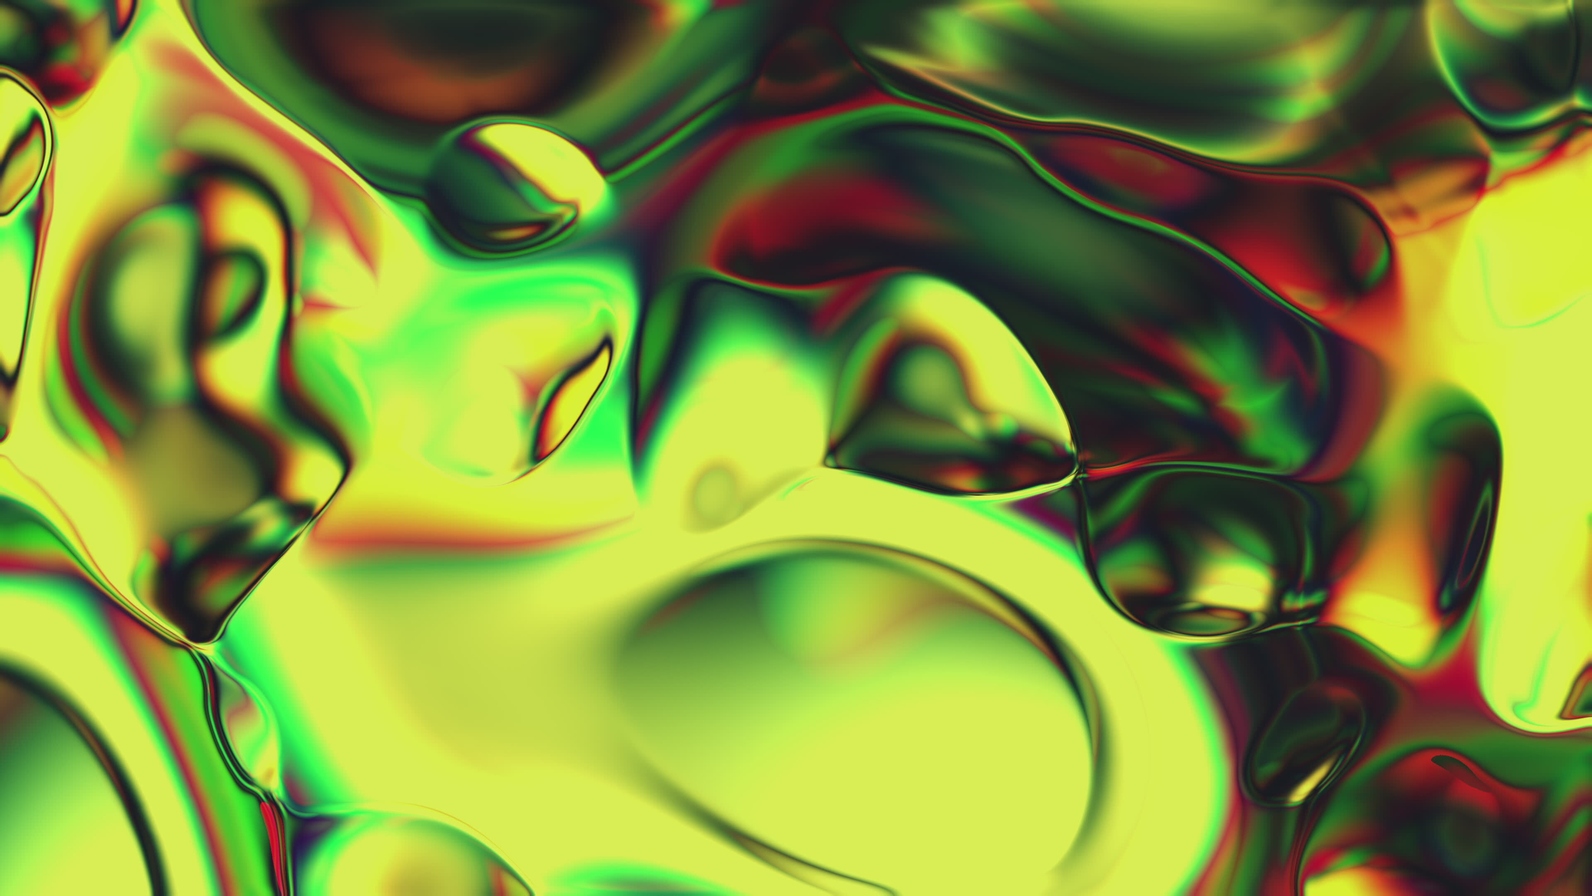 Abstract Liquid Animation 11